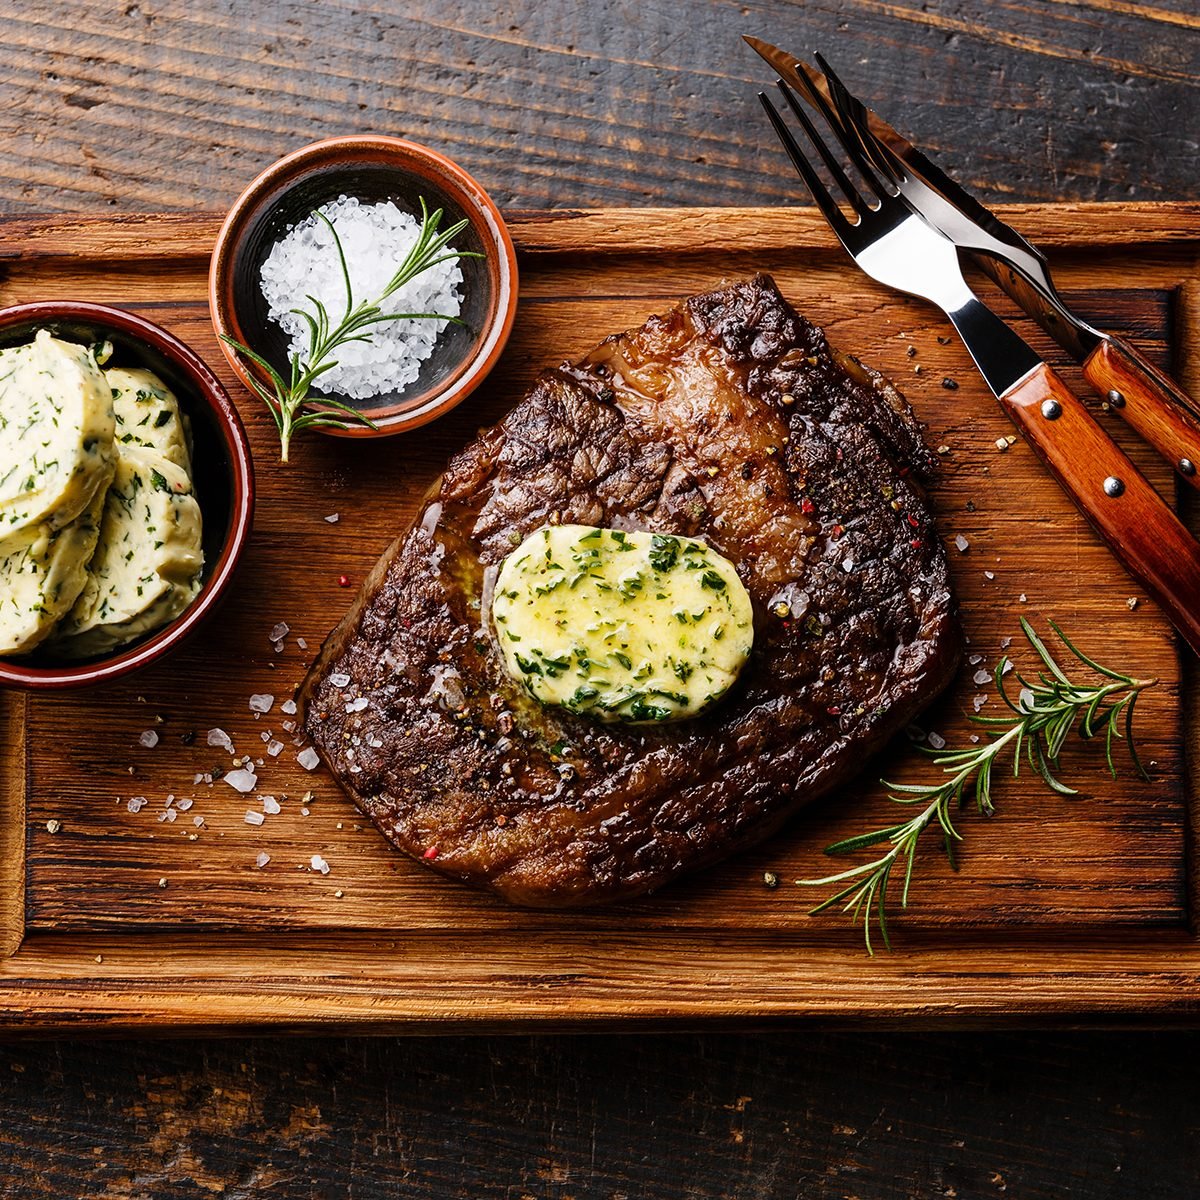 https://www.tasteofhome.com/wp-content/uploads/2019/06/grilled-steak-ribeye-shutterstock_474345460.jpg?fit=700%2C700